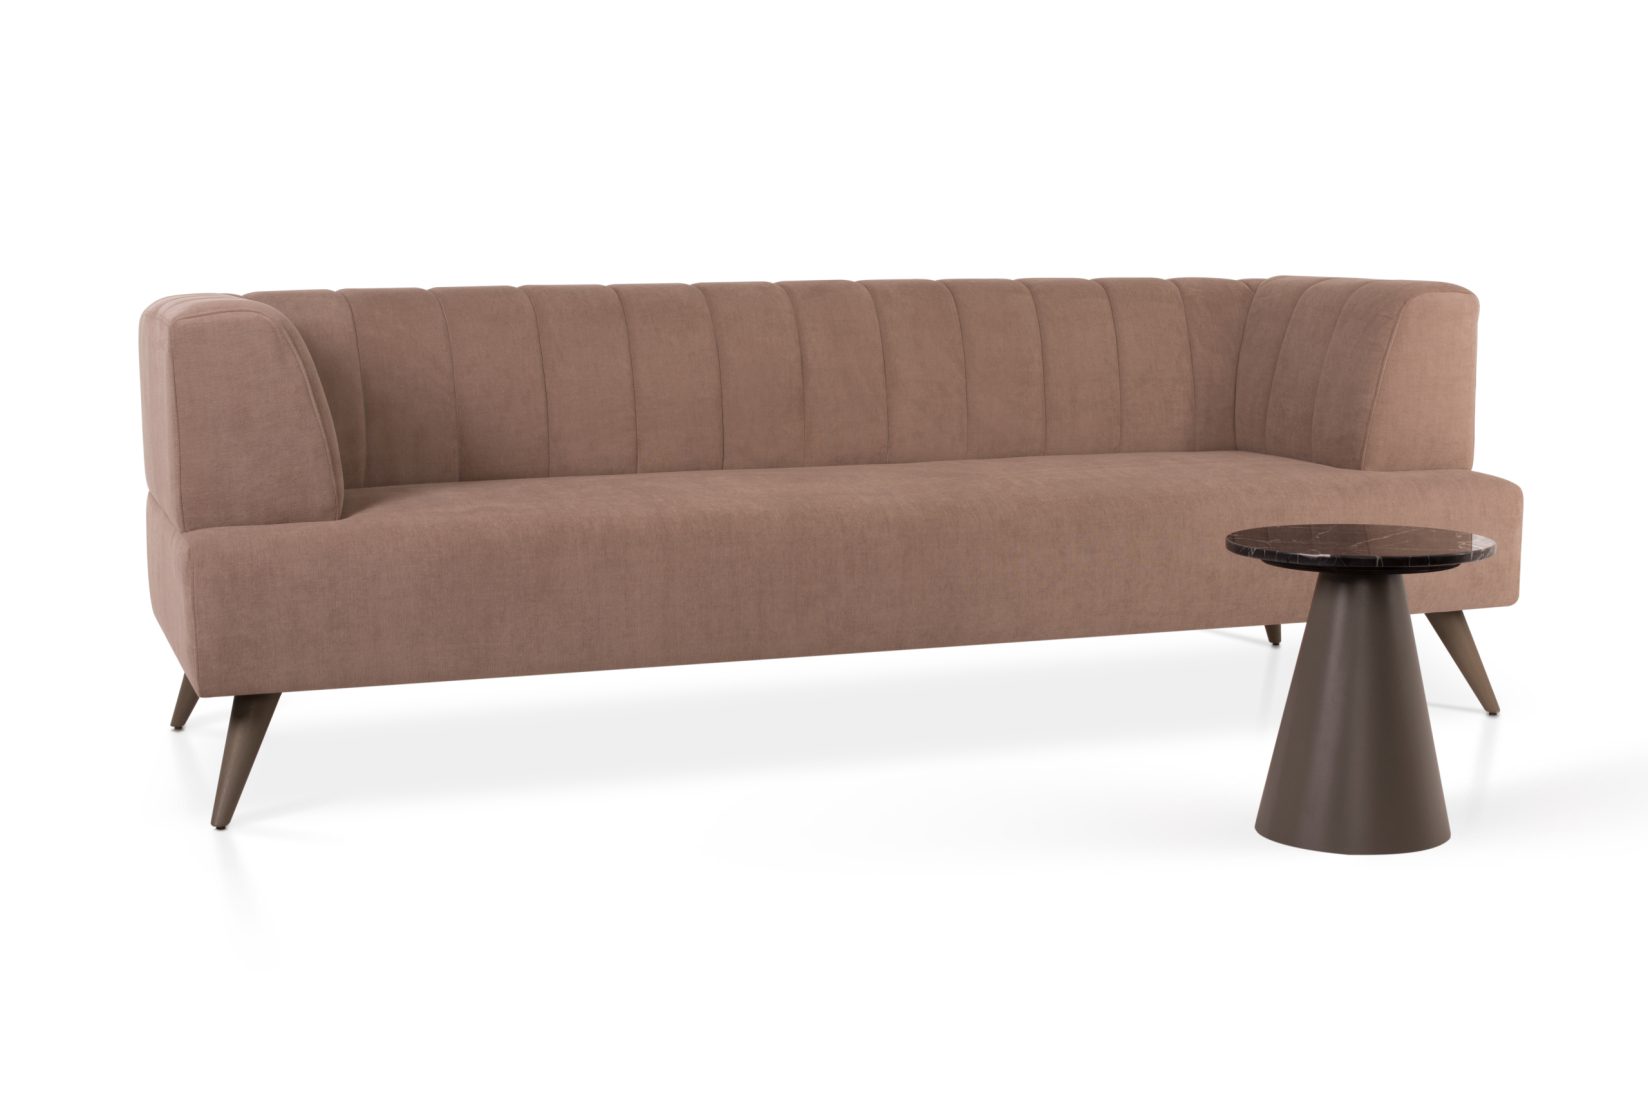 2. Offset Double Sofa, Short Arm & Mushroom Metal Coffee Table